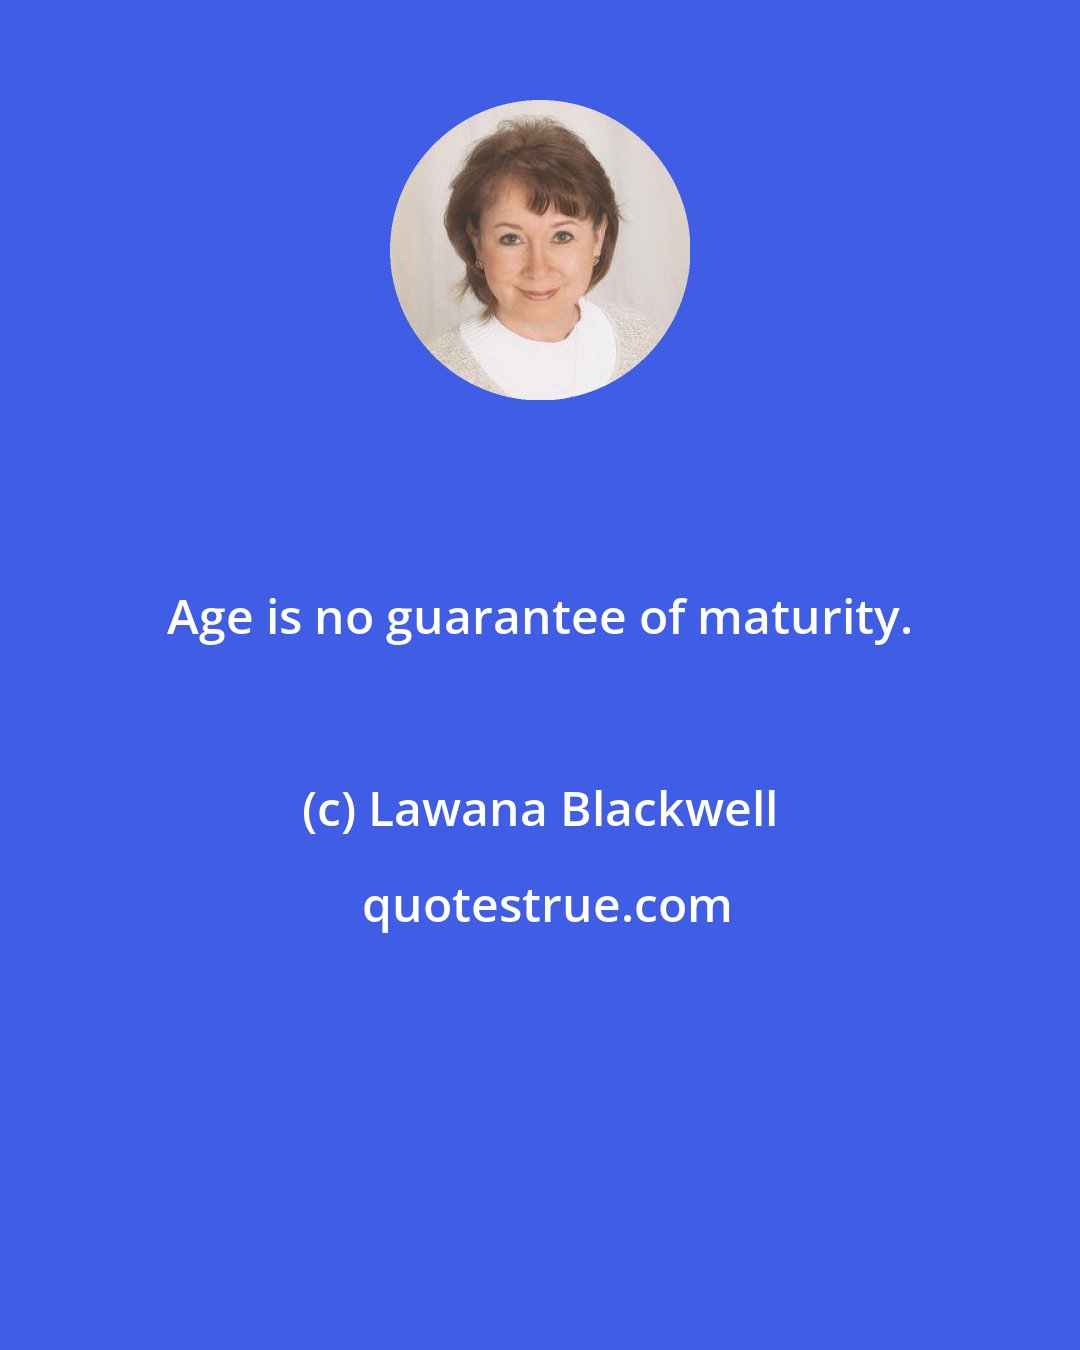 Lawana Blackwell: Age is no guarantee of maturity.